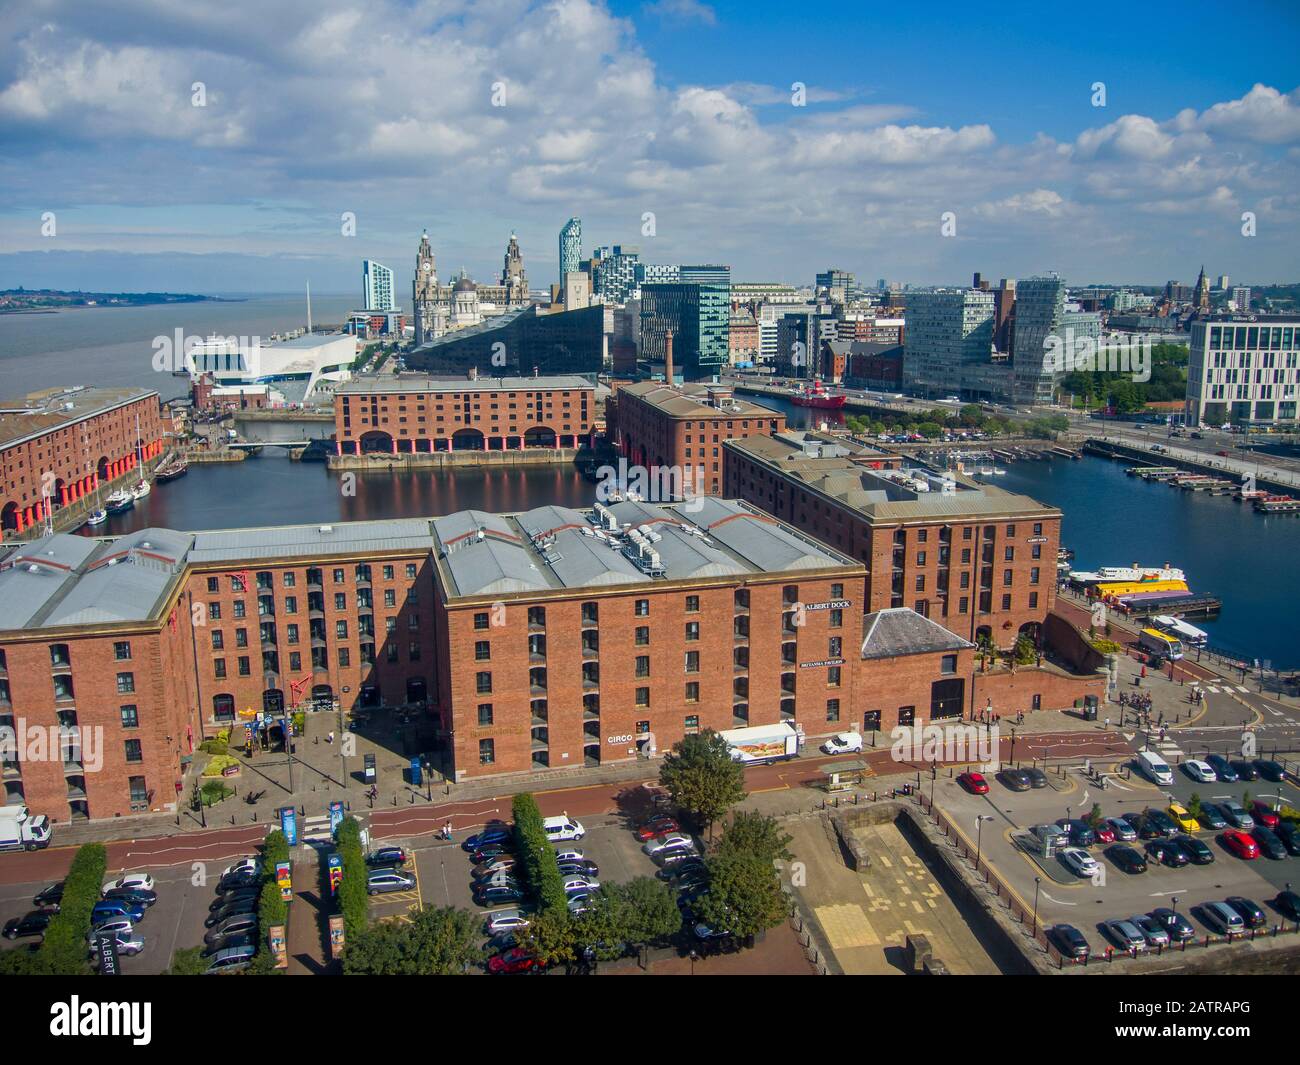 Albert and Salthouse Docks, Liverpool Stock Photo